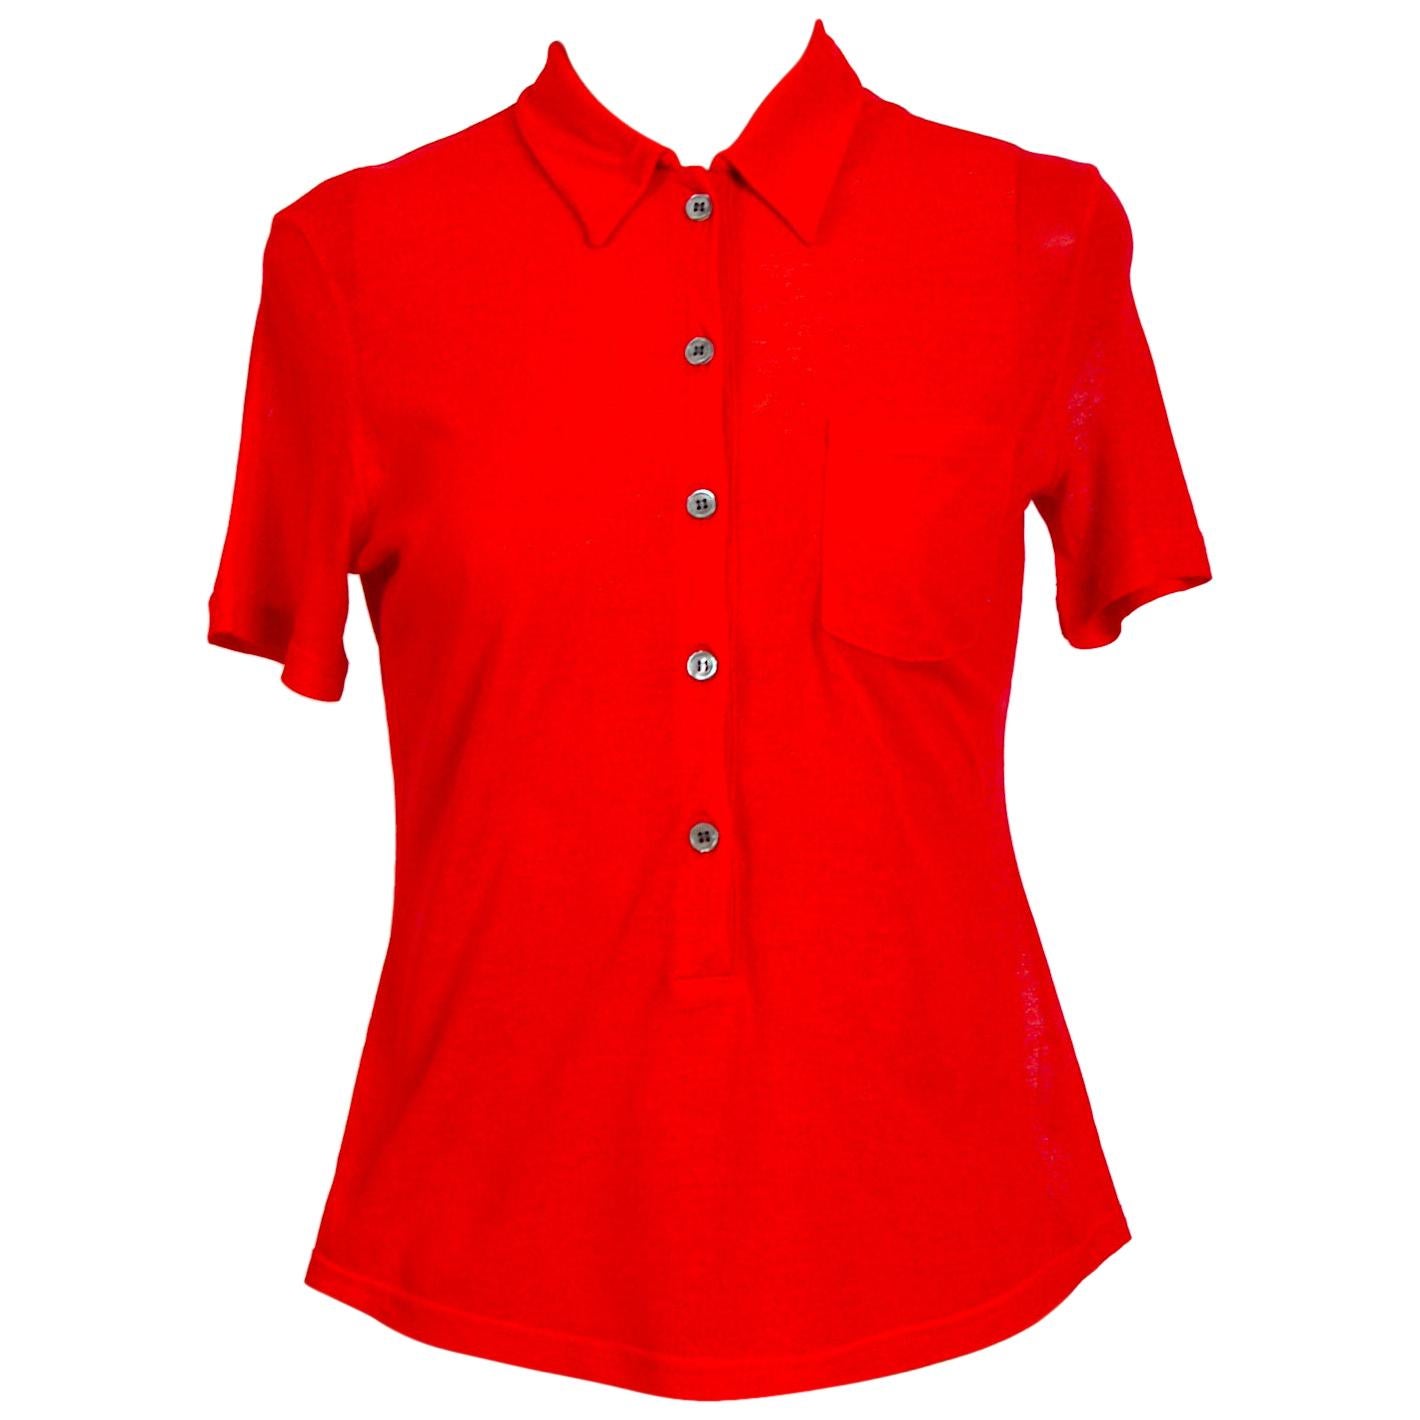 Helmut Lang collectors vintage 1998 red cotton jersey top